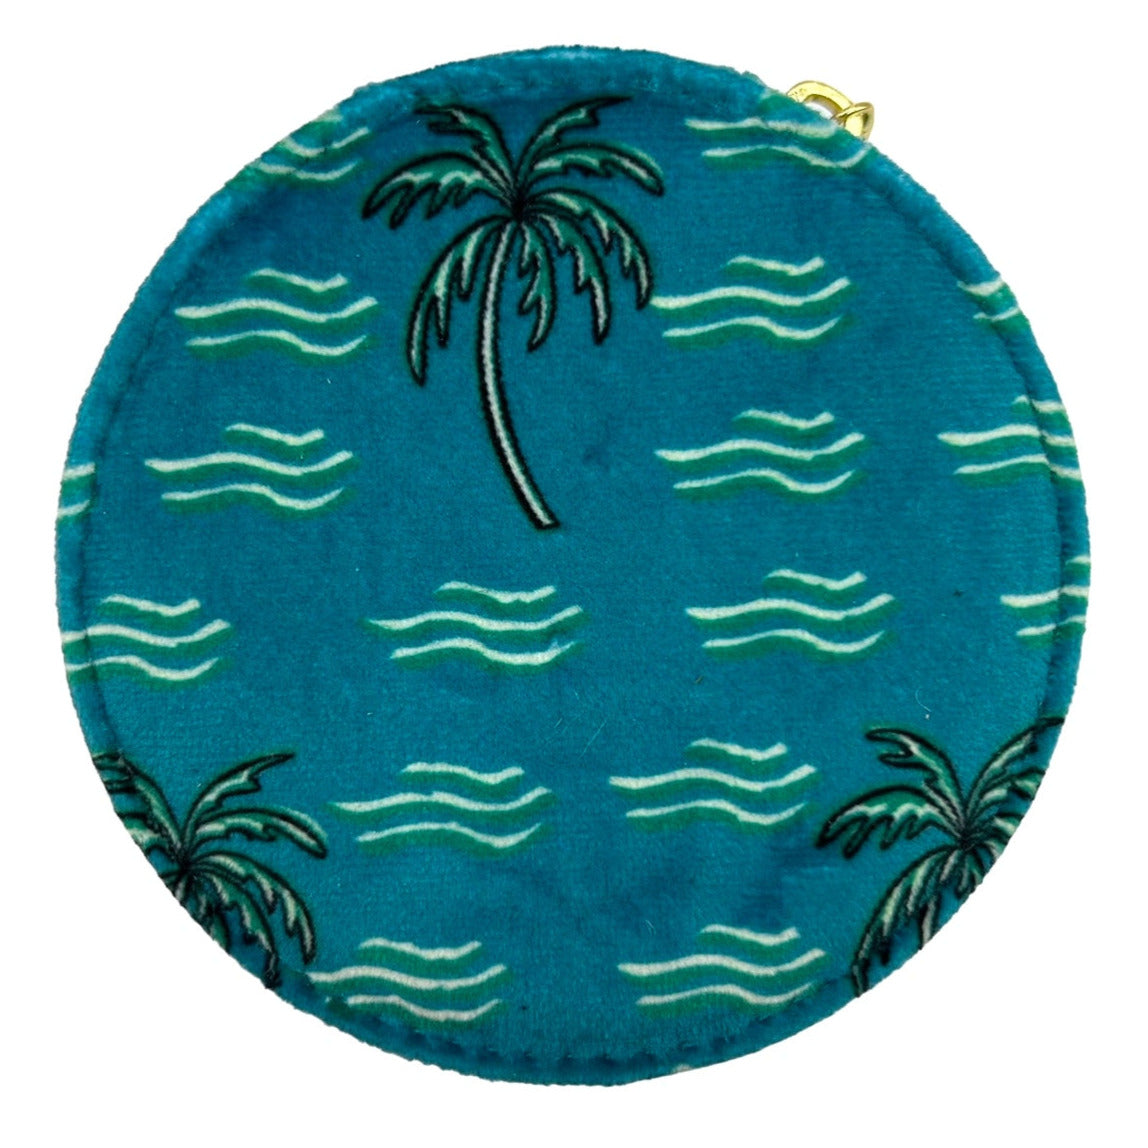 Jewellery travel pot in teal palm tree print